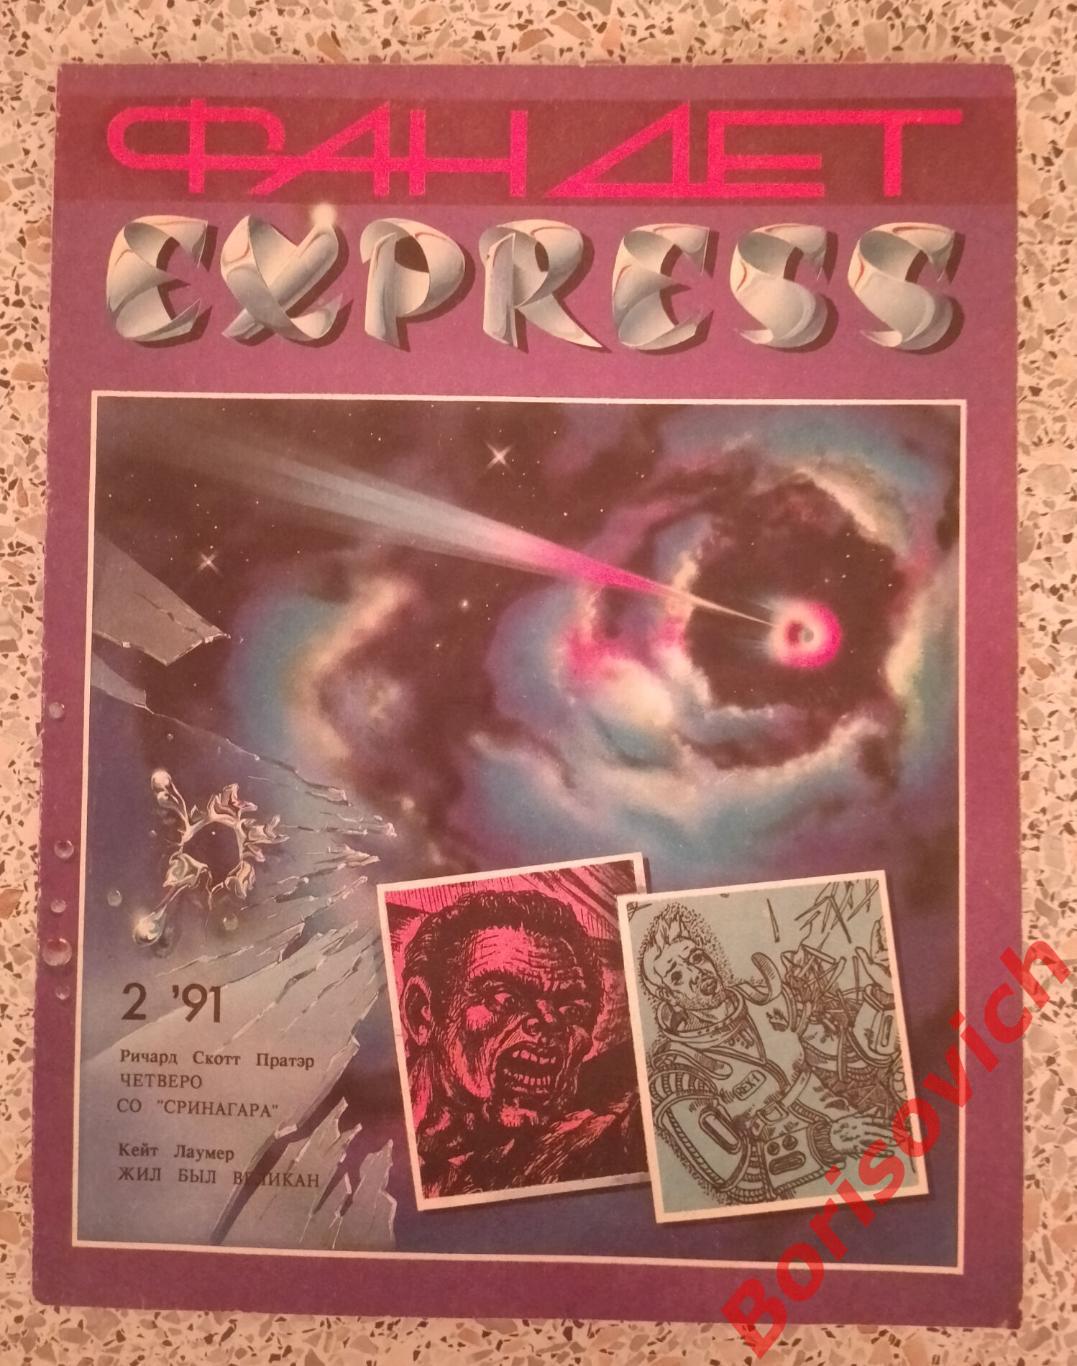 ФанДет экспресс 2 ' 1991